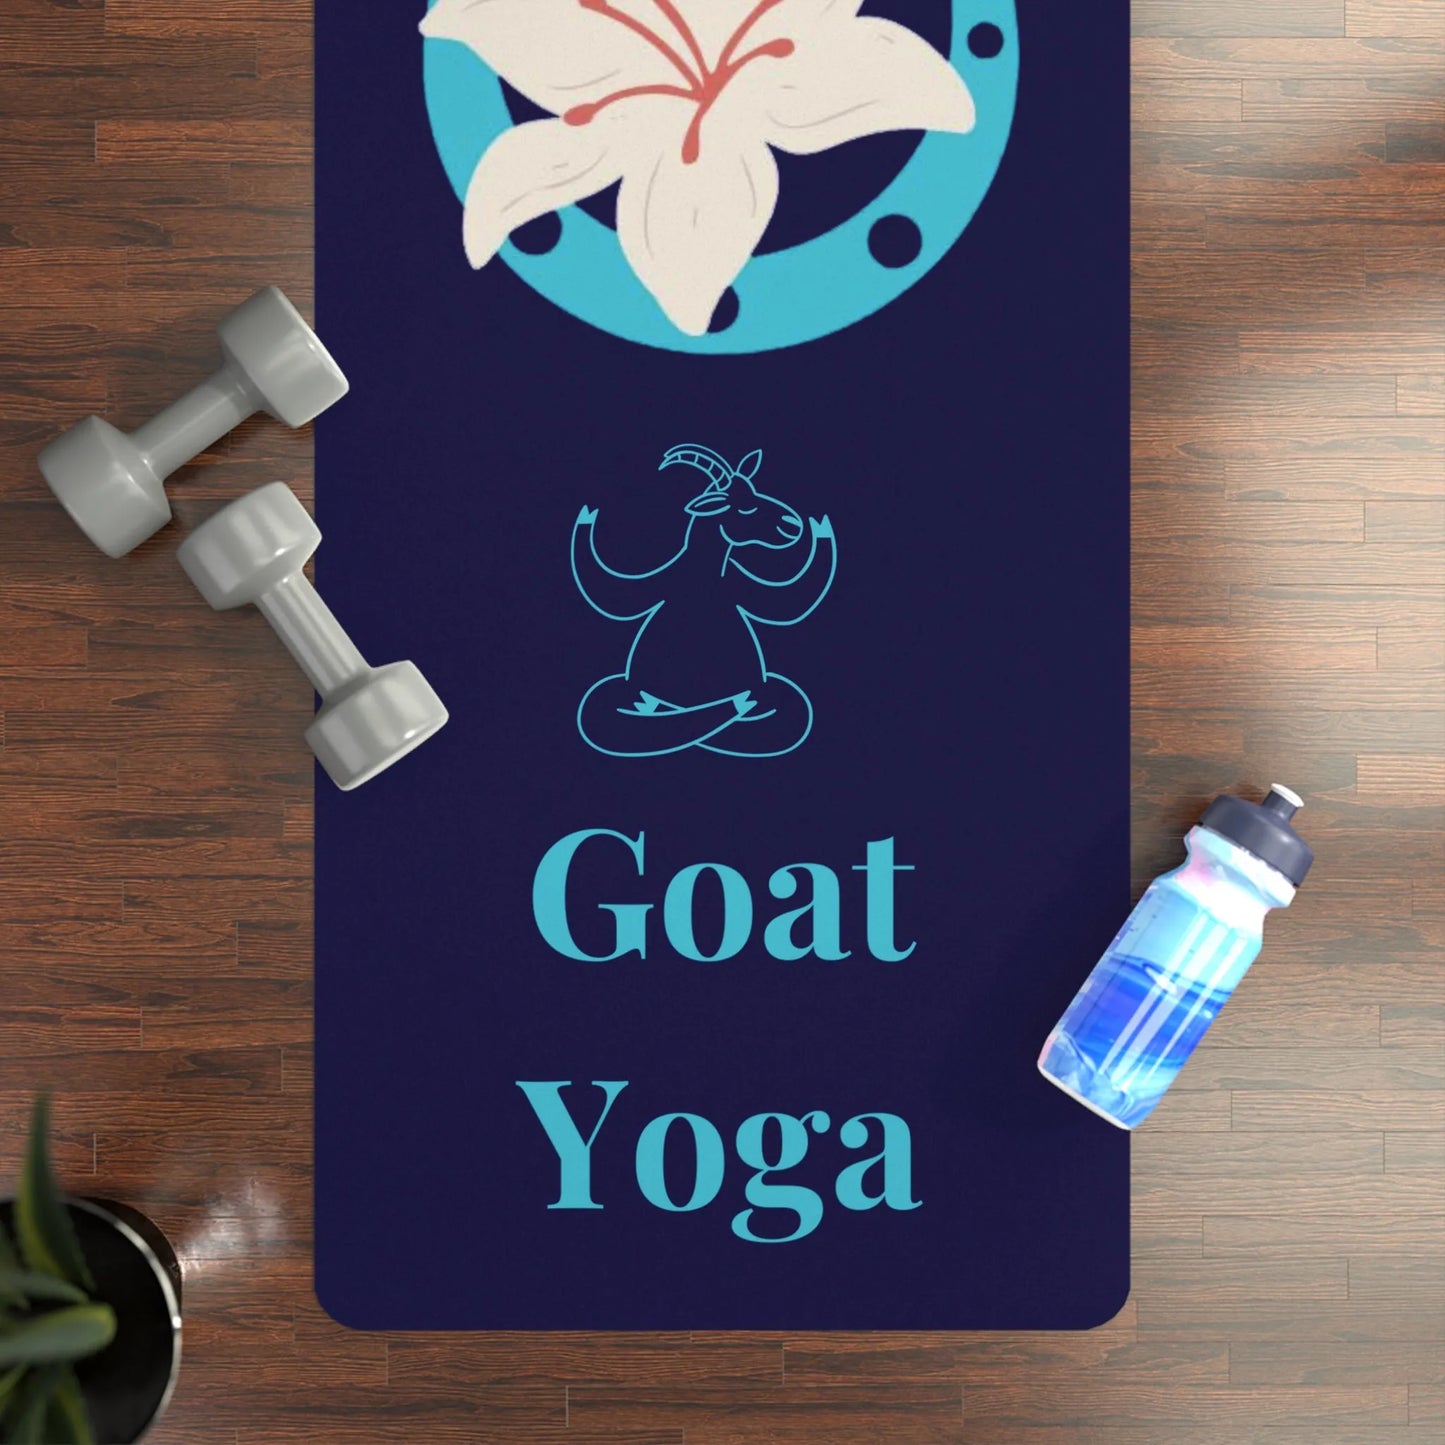 The Lily Farm Goat Yoga Rubber Yoga Mat